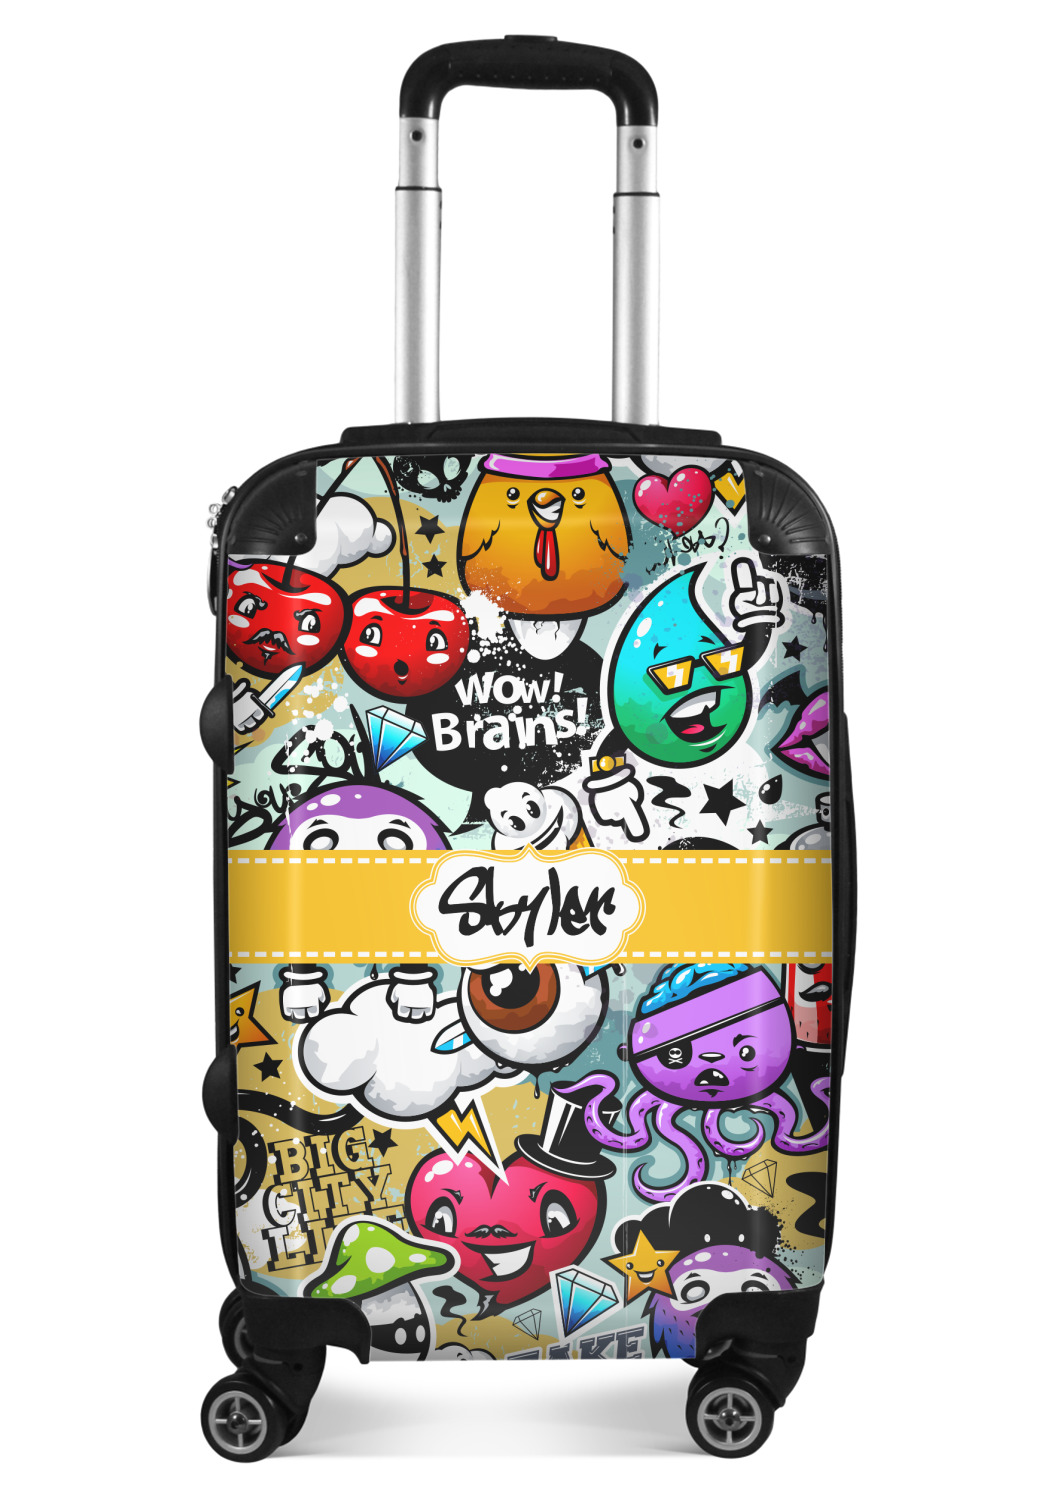 Graffiti Suitcase (Personalized) - YouCustomizeIt